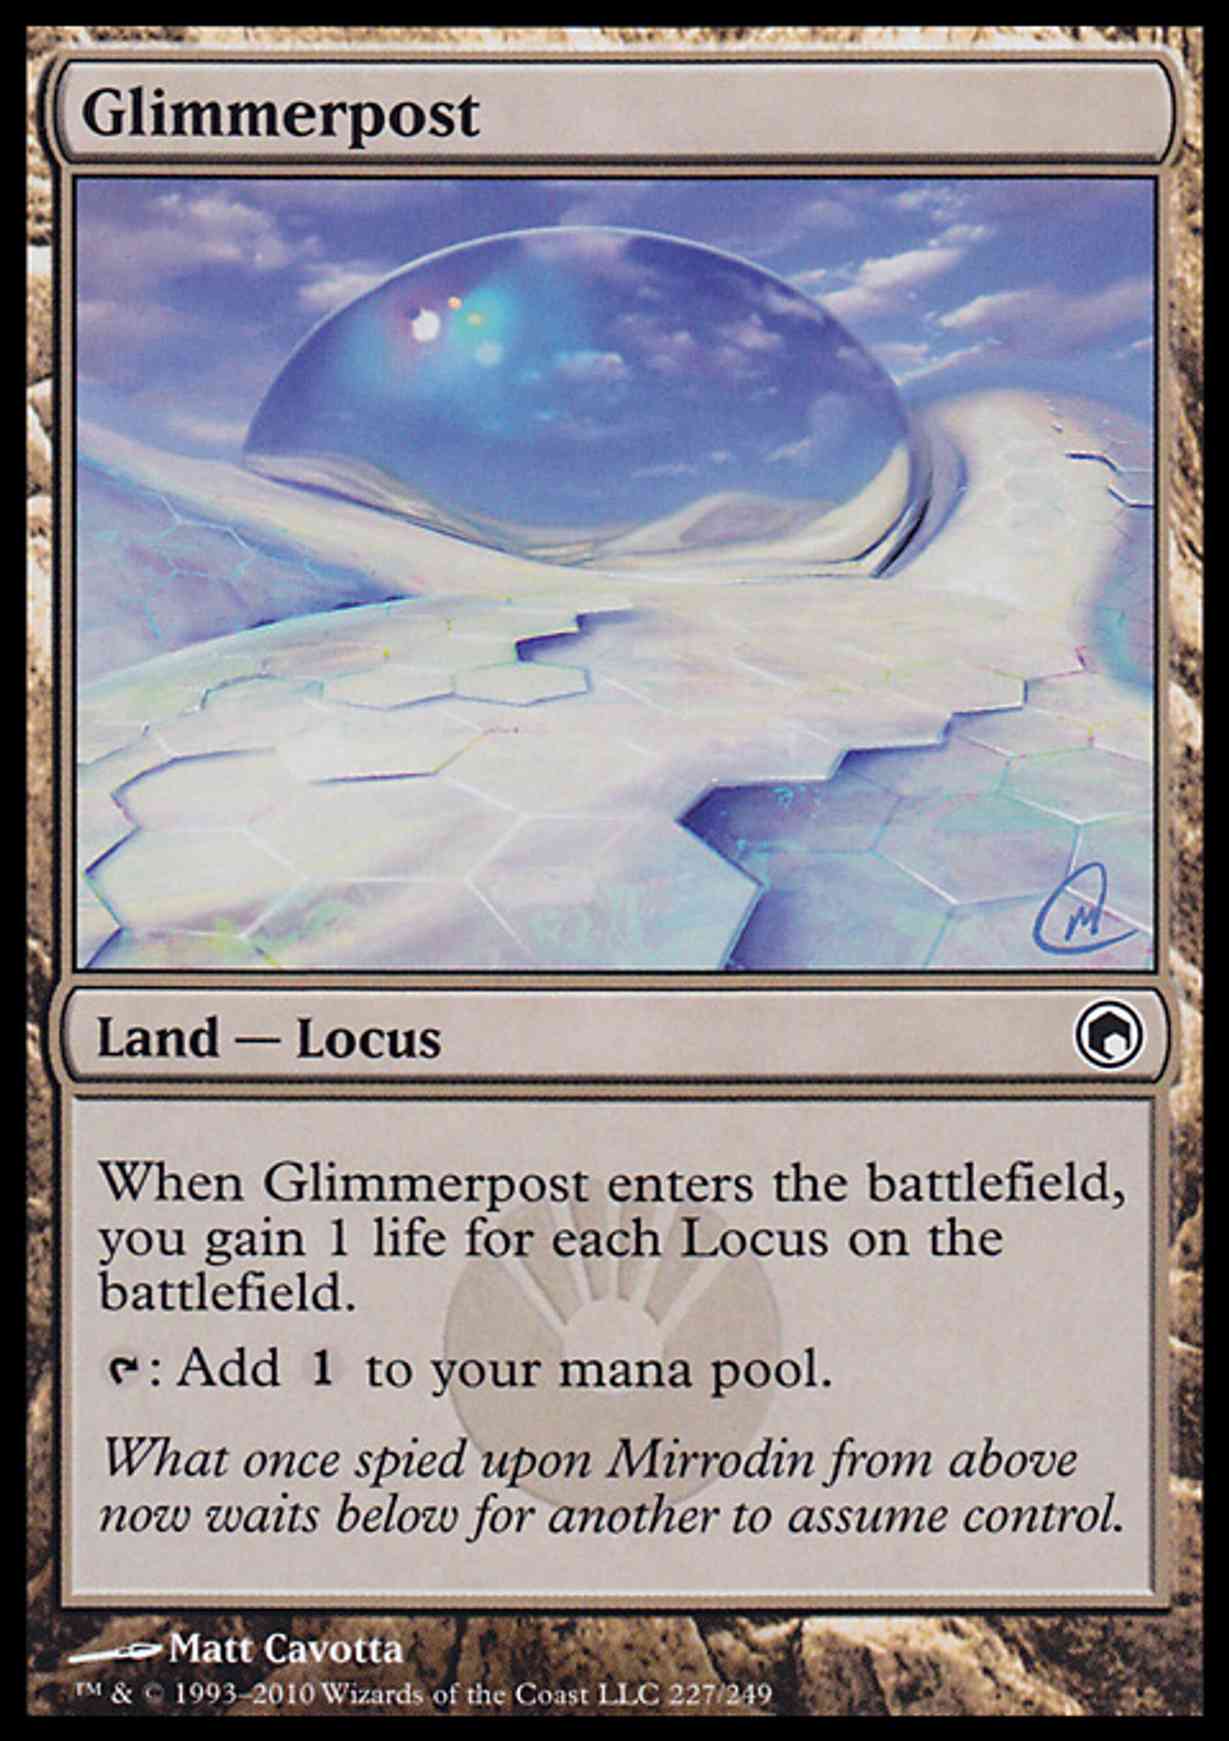 Glimmerpost magic card front